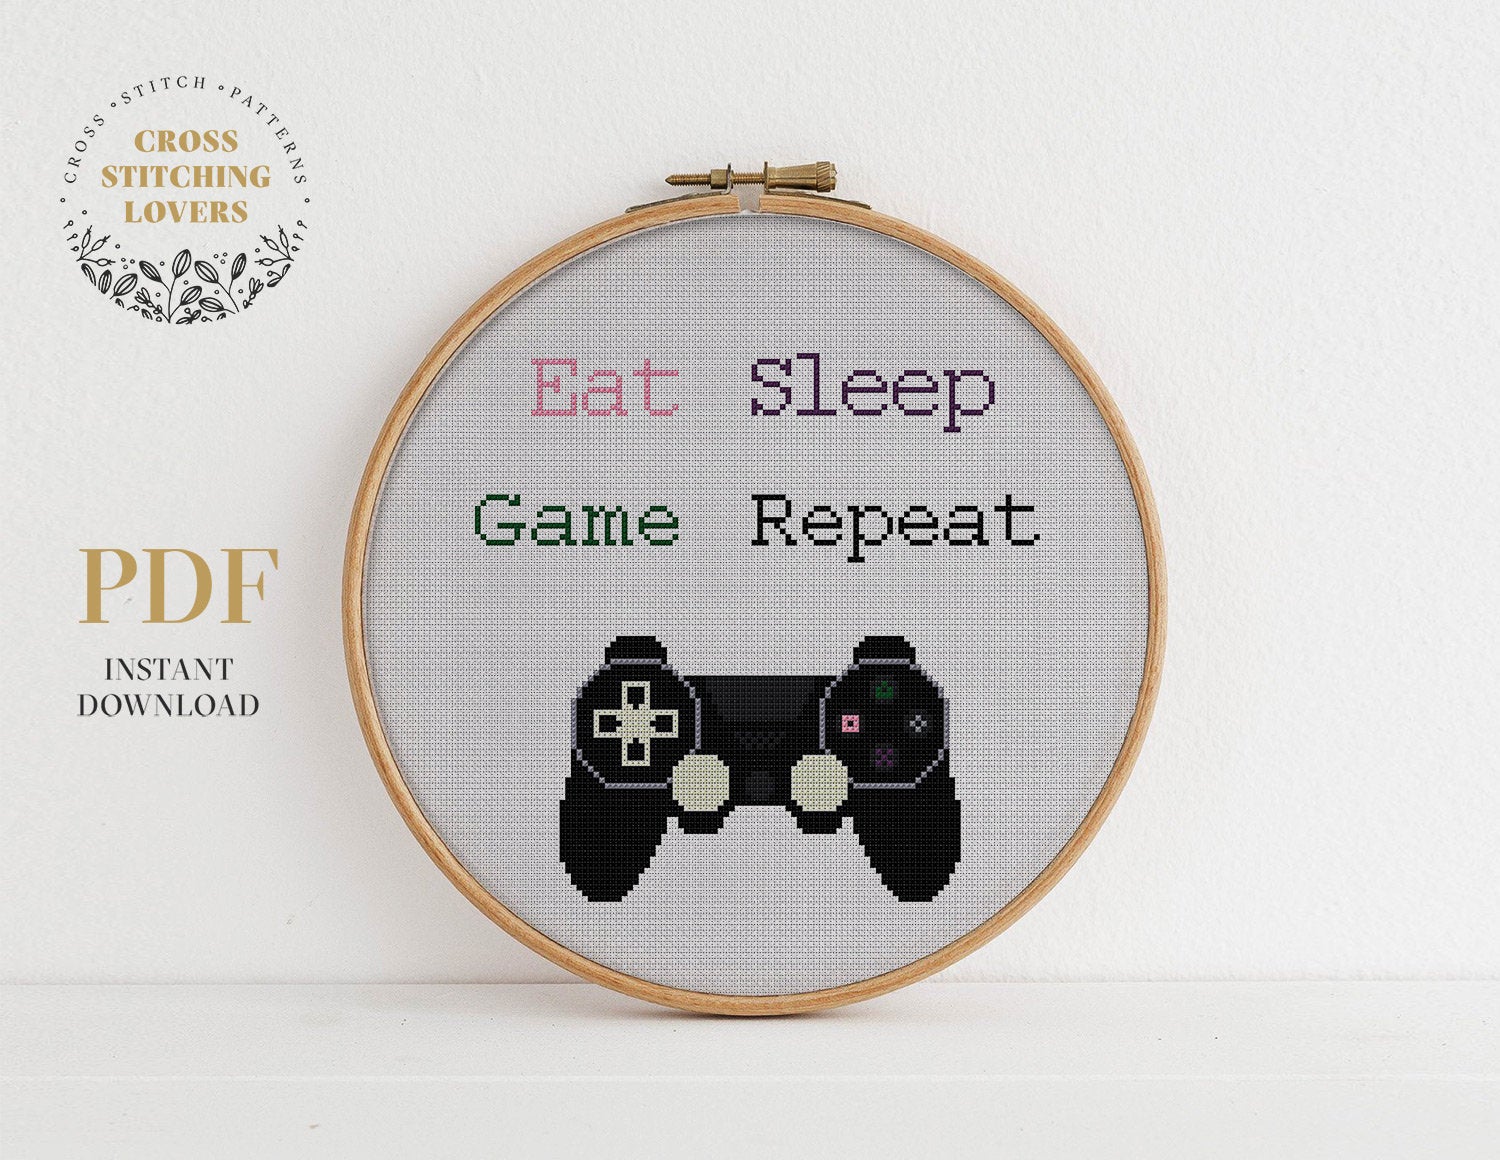 Eat, sleep, game, repeat - Cross stitch pattern